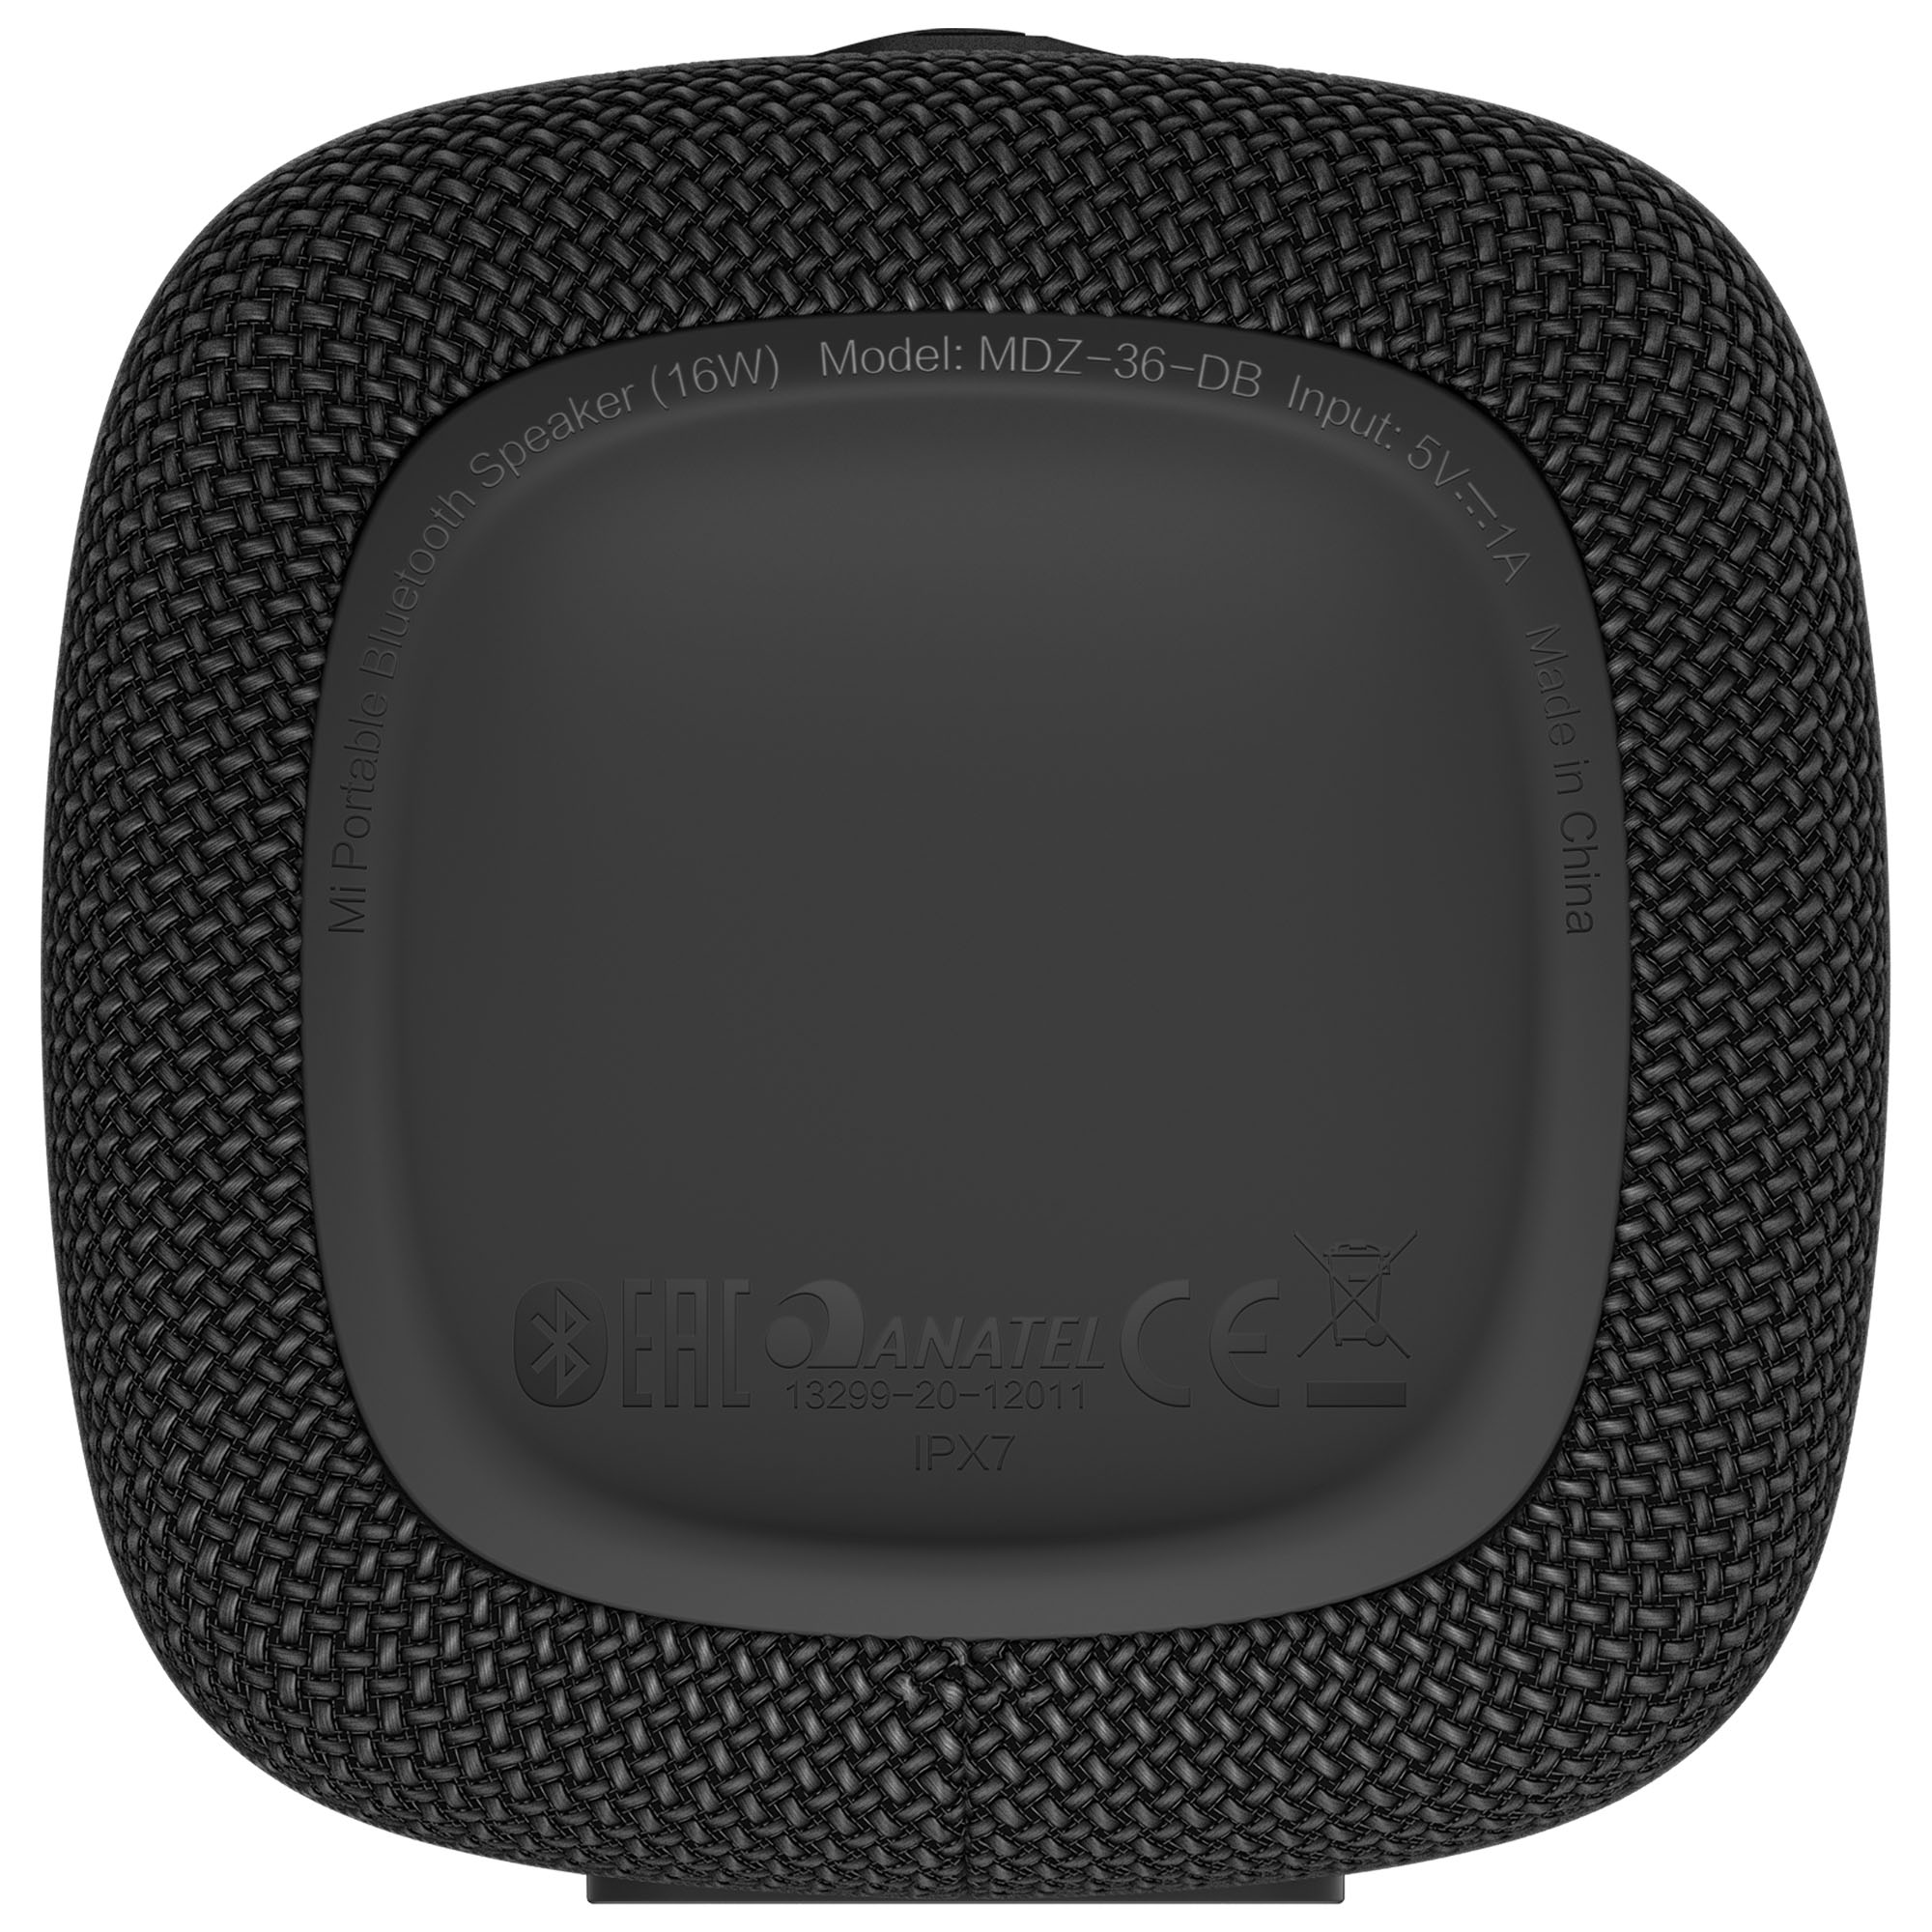 Zvucnik Xiaomi Mi Portable Blth Speaker Black